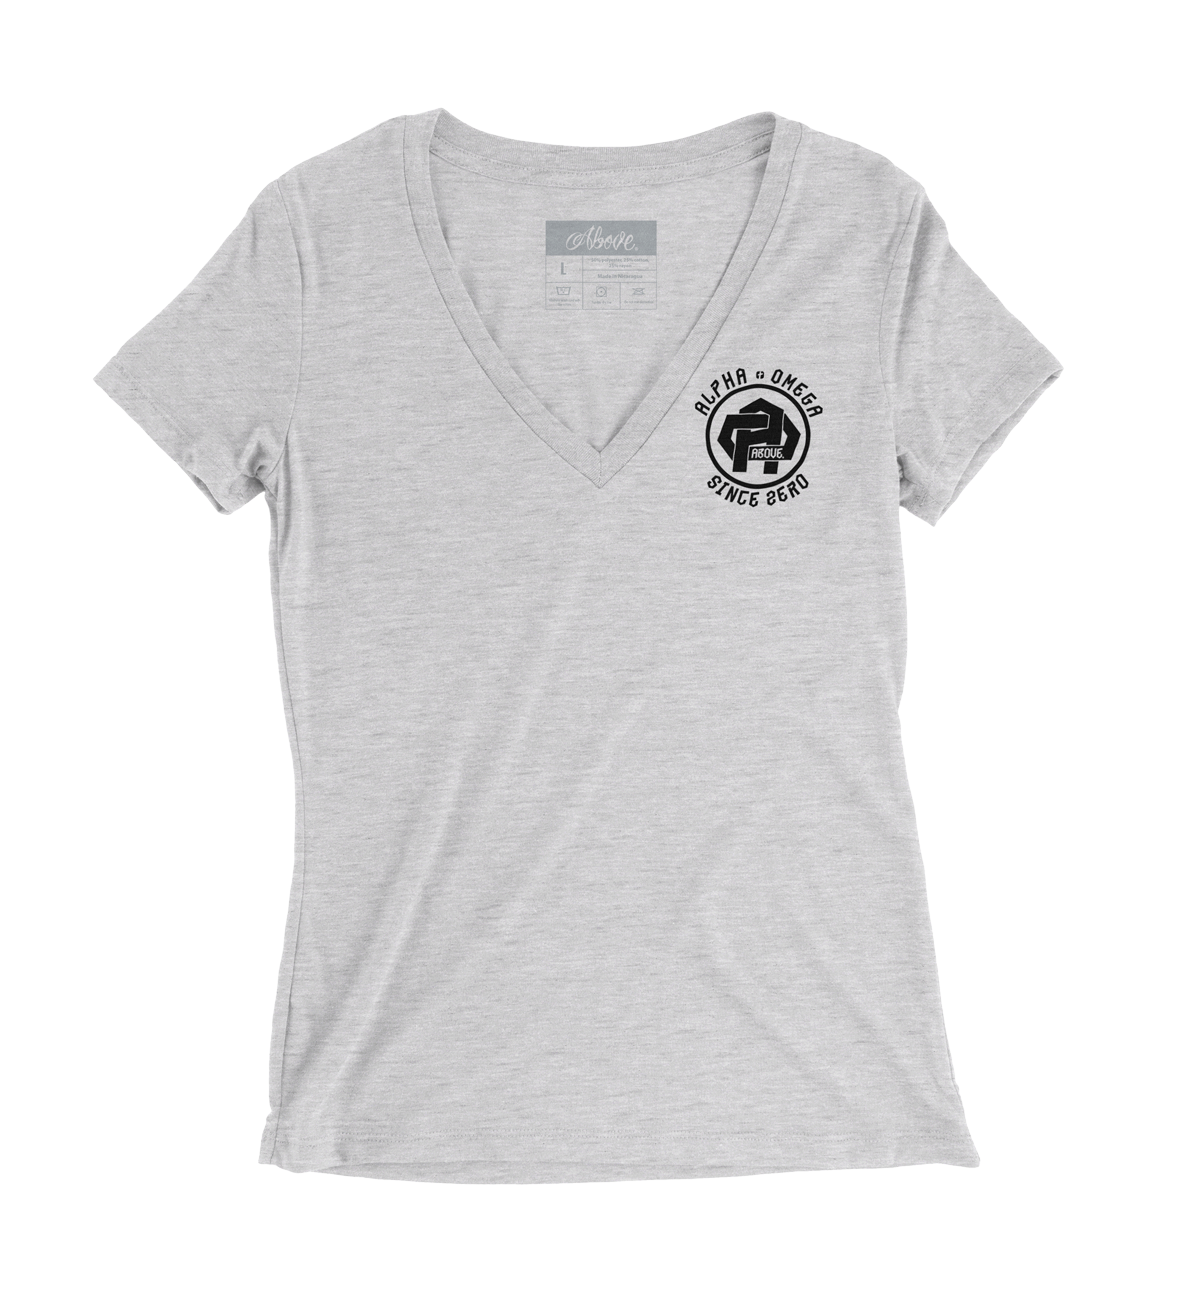 Alfa + Omega Black/White T-Shirt – Alfa Omega Clothing